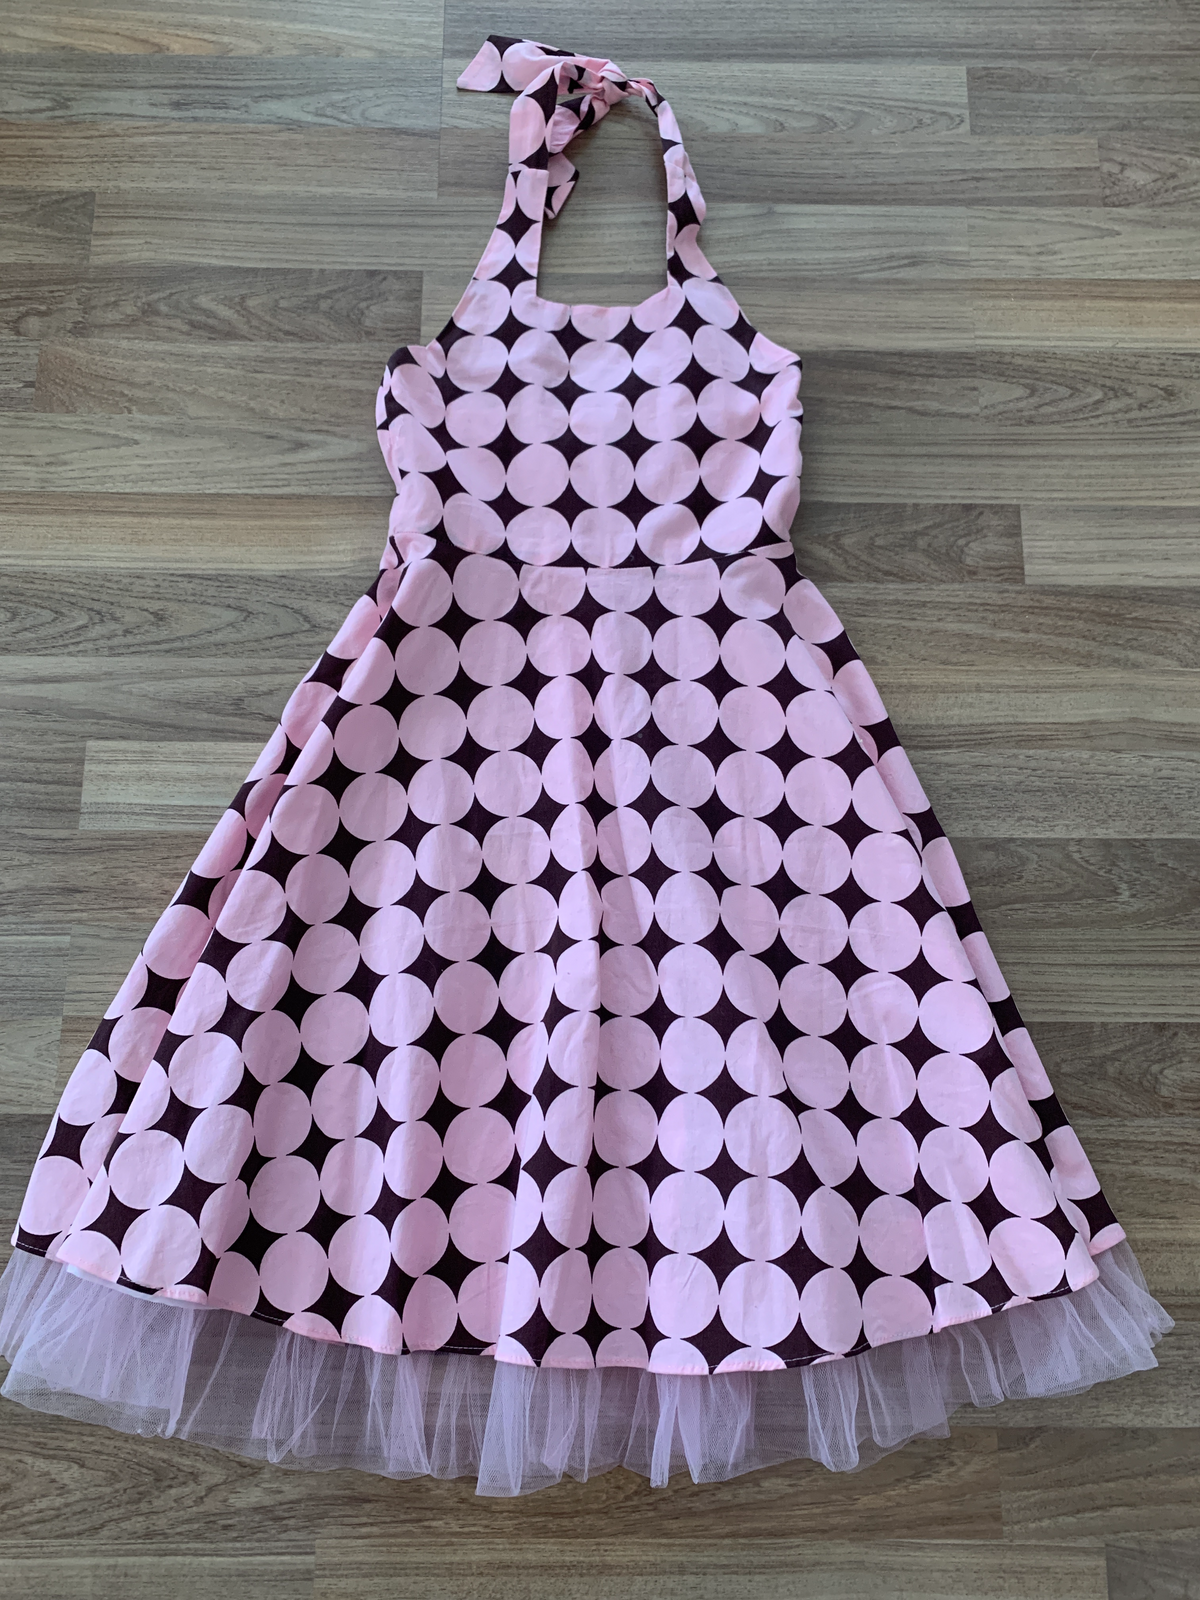 Dress (Girls Size 10)